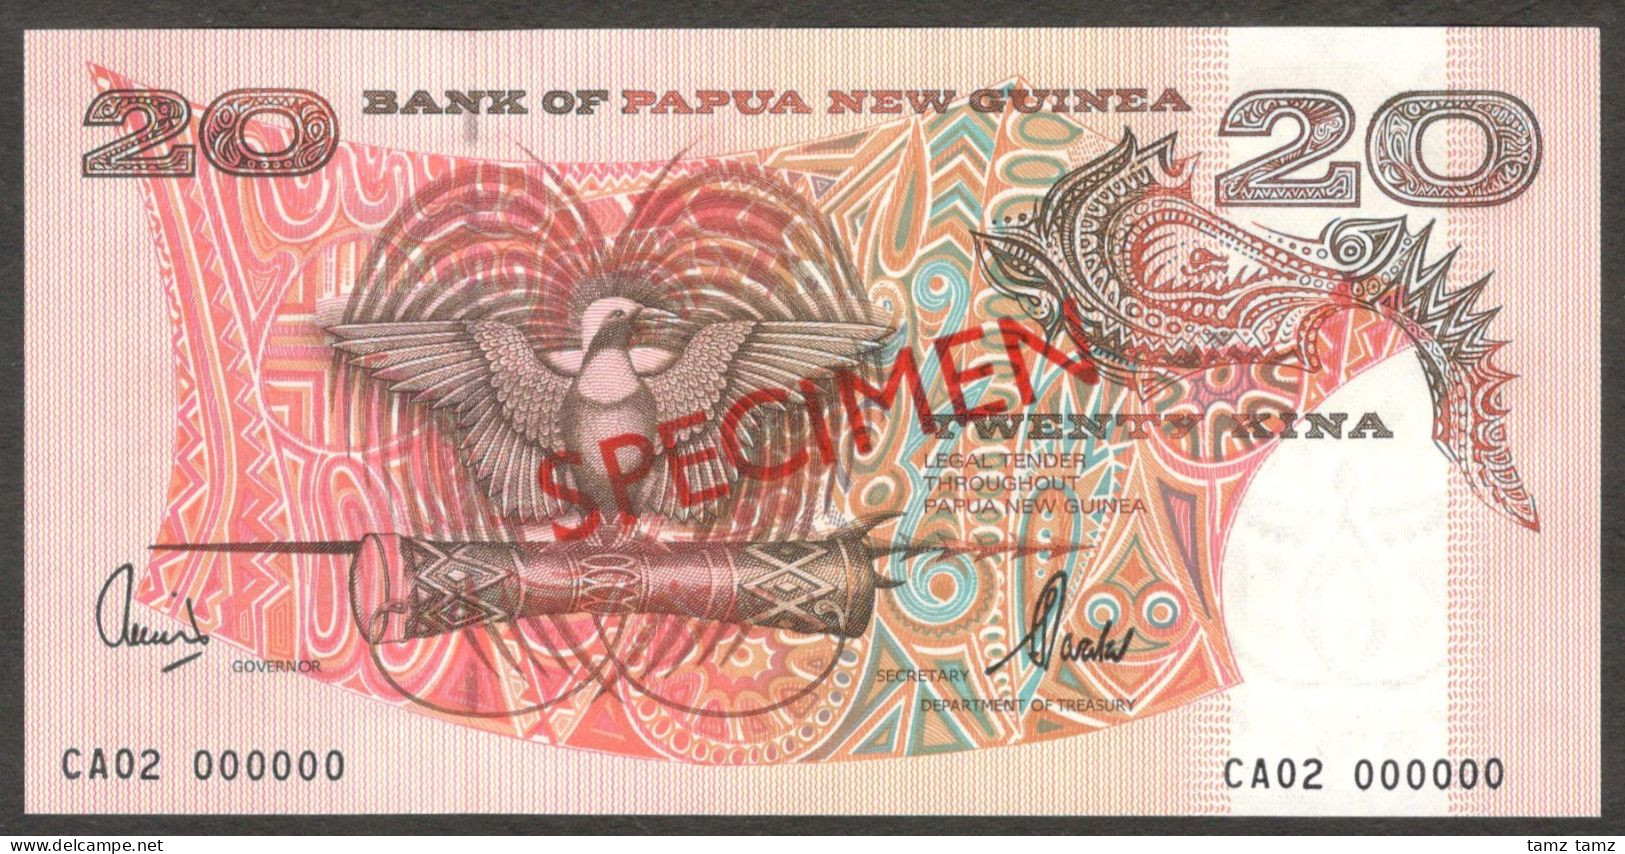 Papua New Guinea 20 Kina P-10es 2002 Specimen CA02 000000 UNC - Papua New Guinea